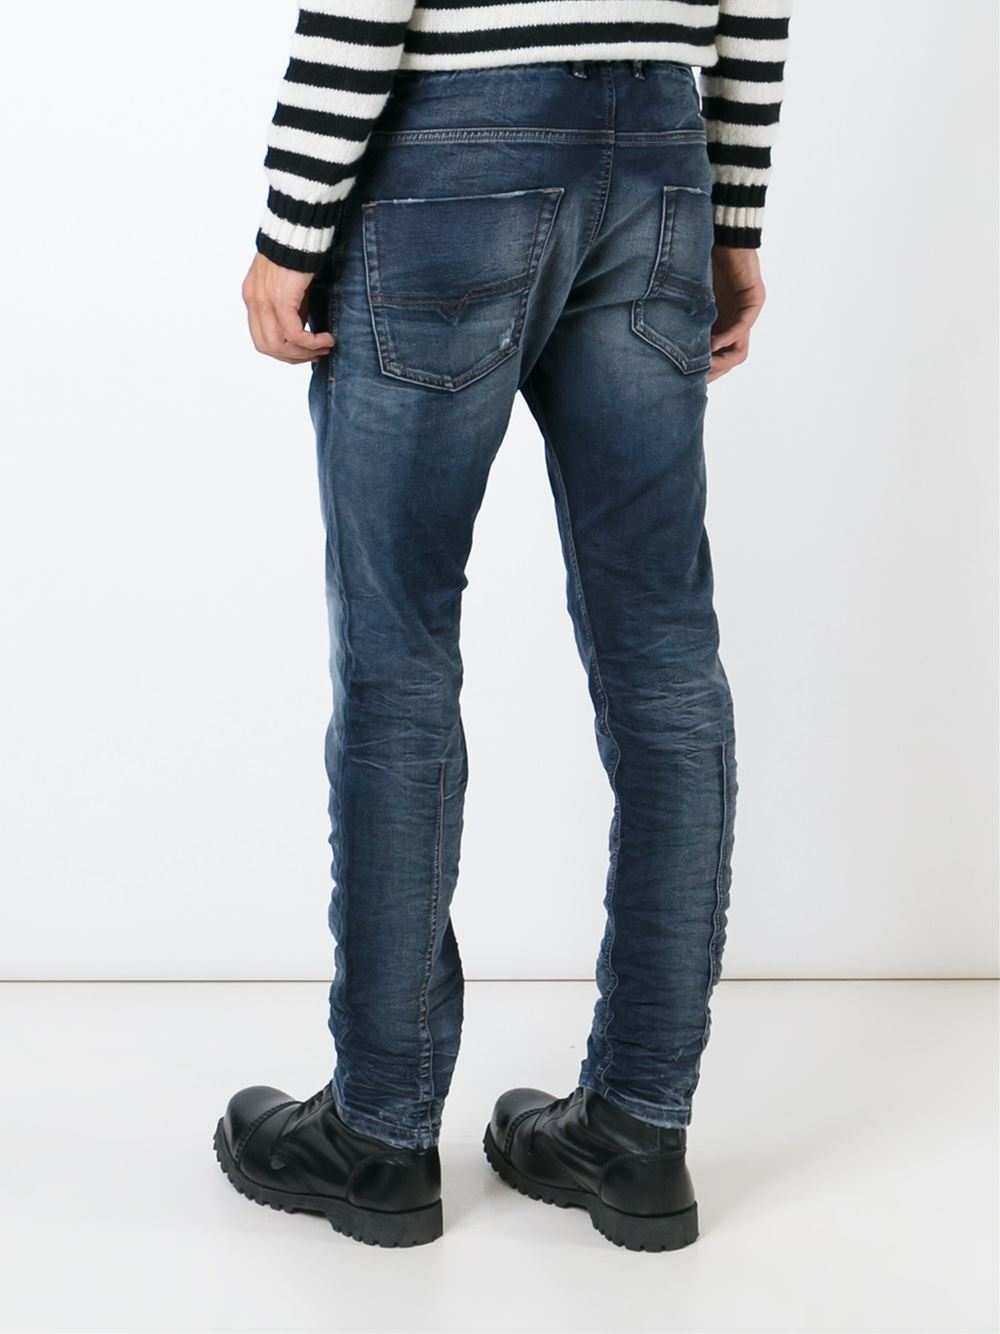 Lyst Diesel 'krooley' Drawstring Jeans in Blue for Men